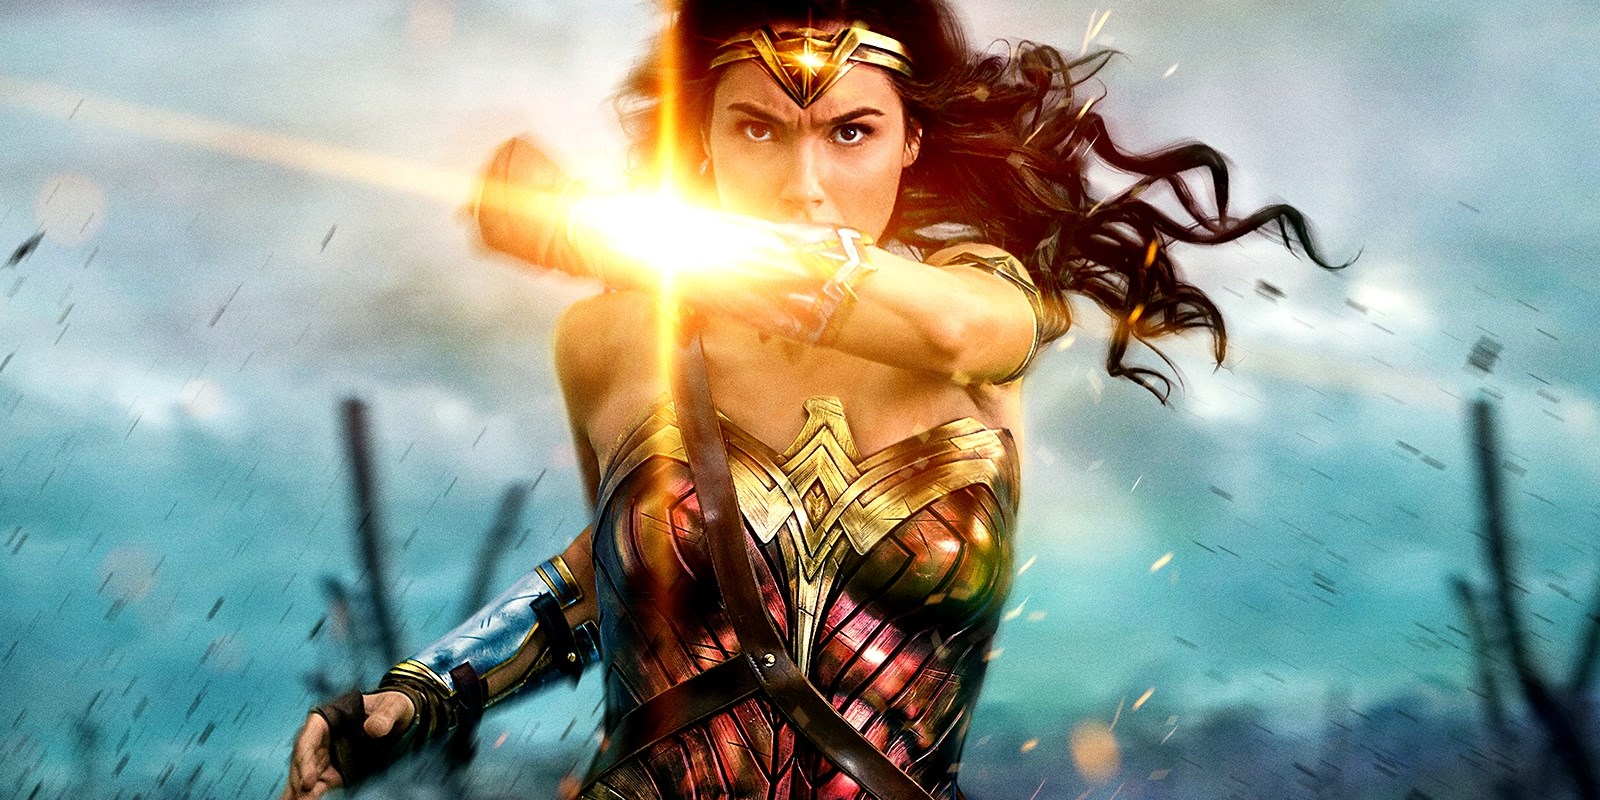 Wonder-Woman-Movie-Poster